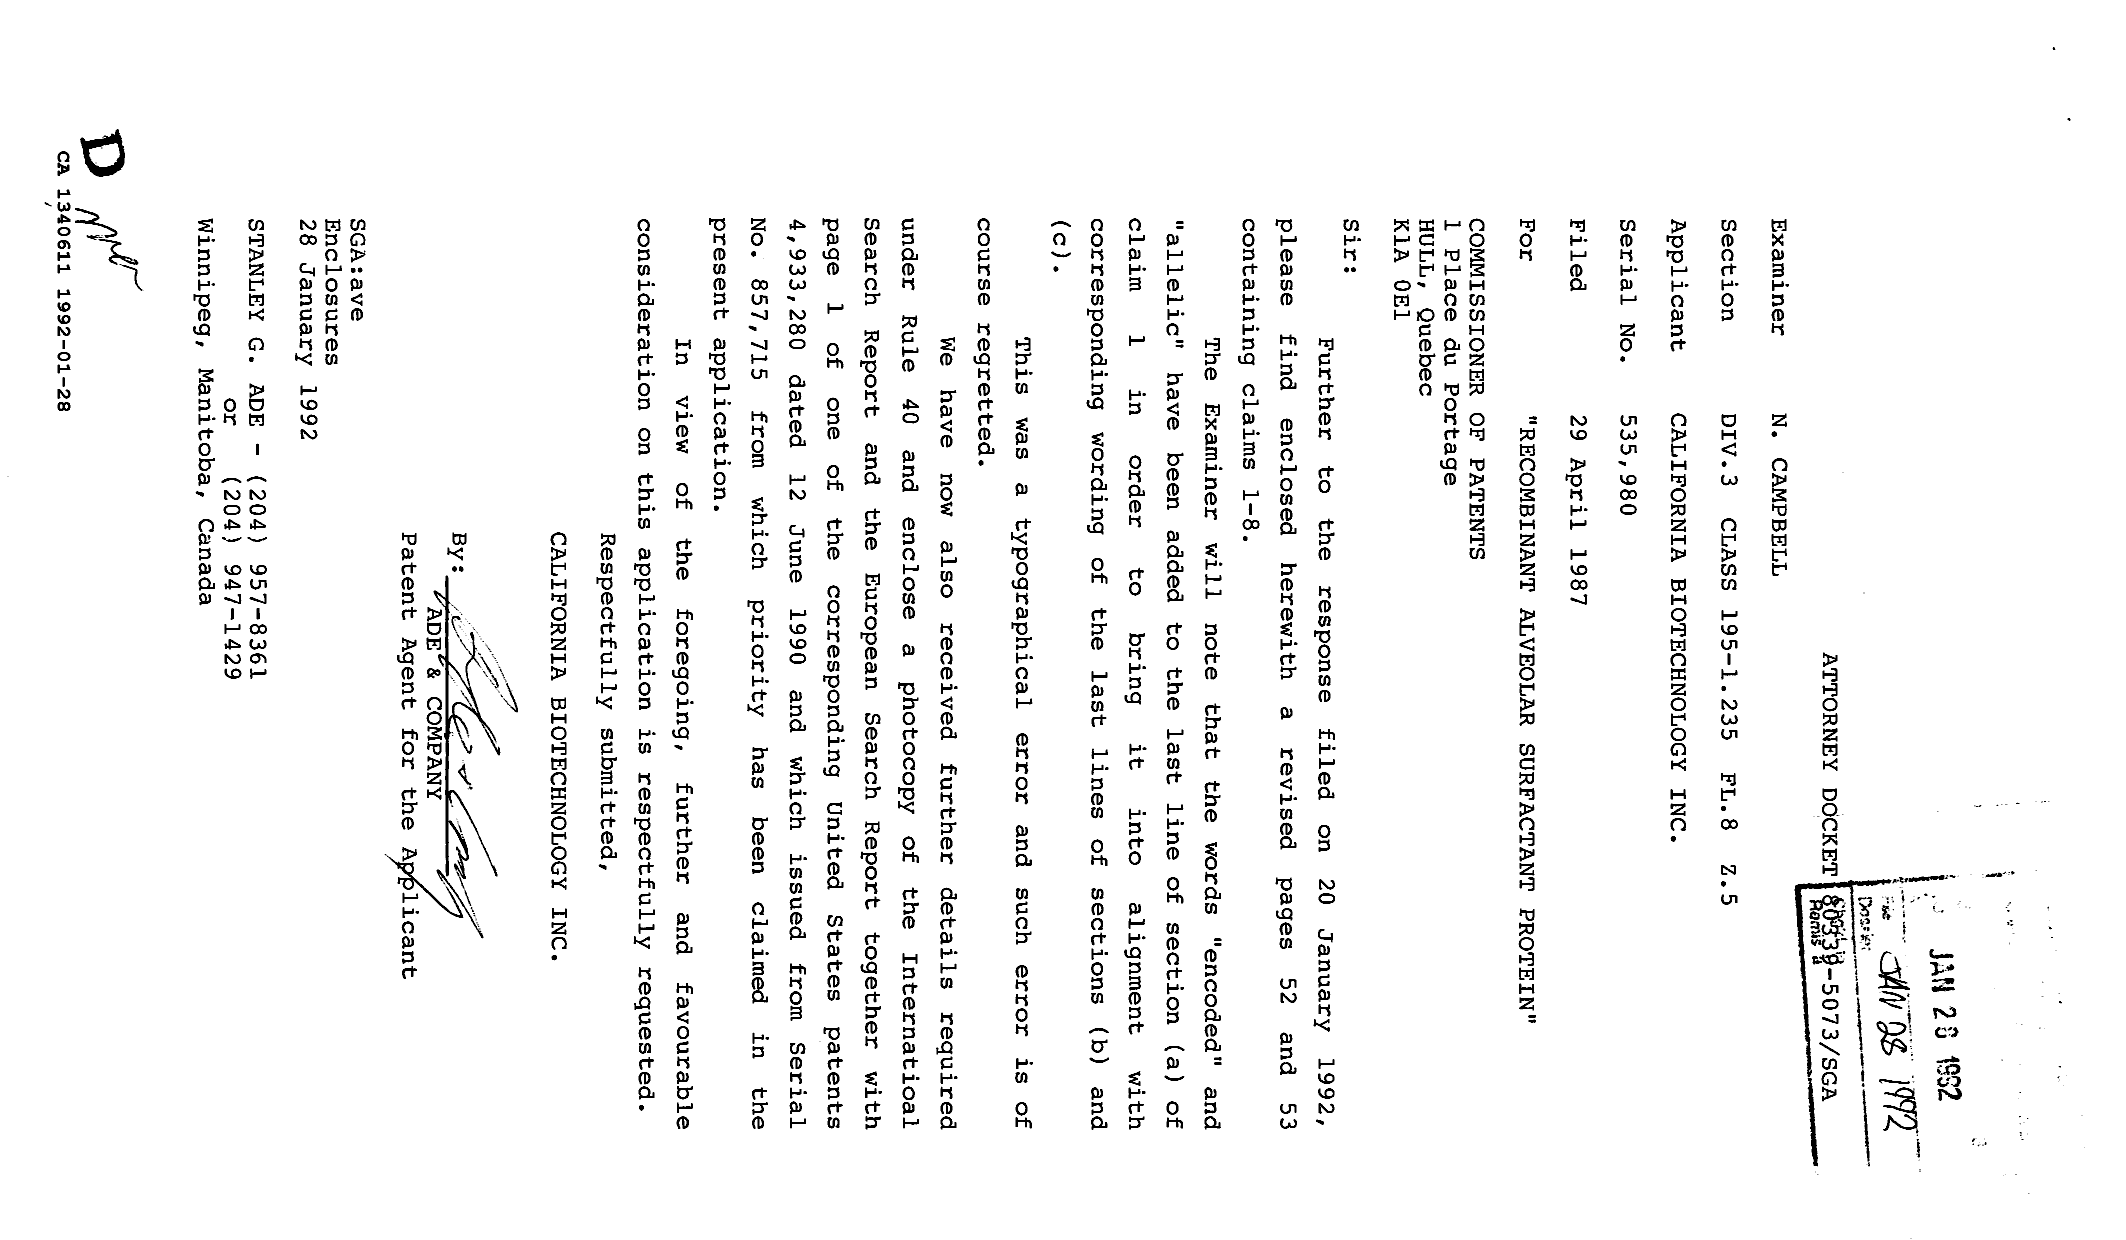 Canadian Patent Document 1340611. Prosecution Correspondence 19920128. Image 1 of 4